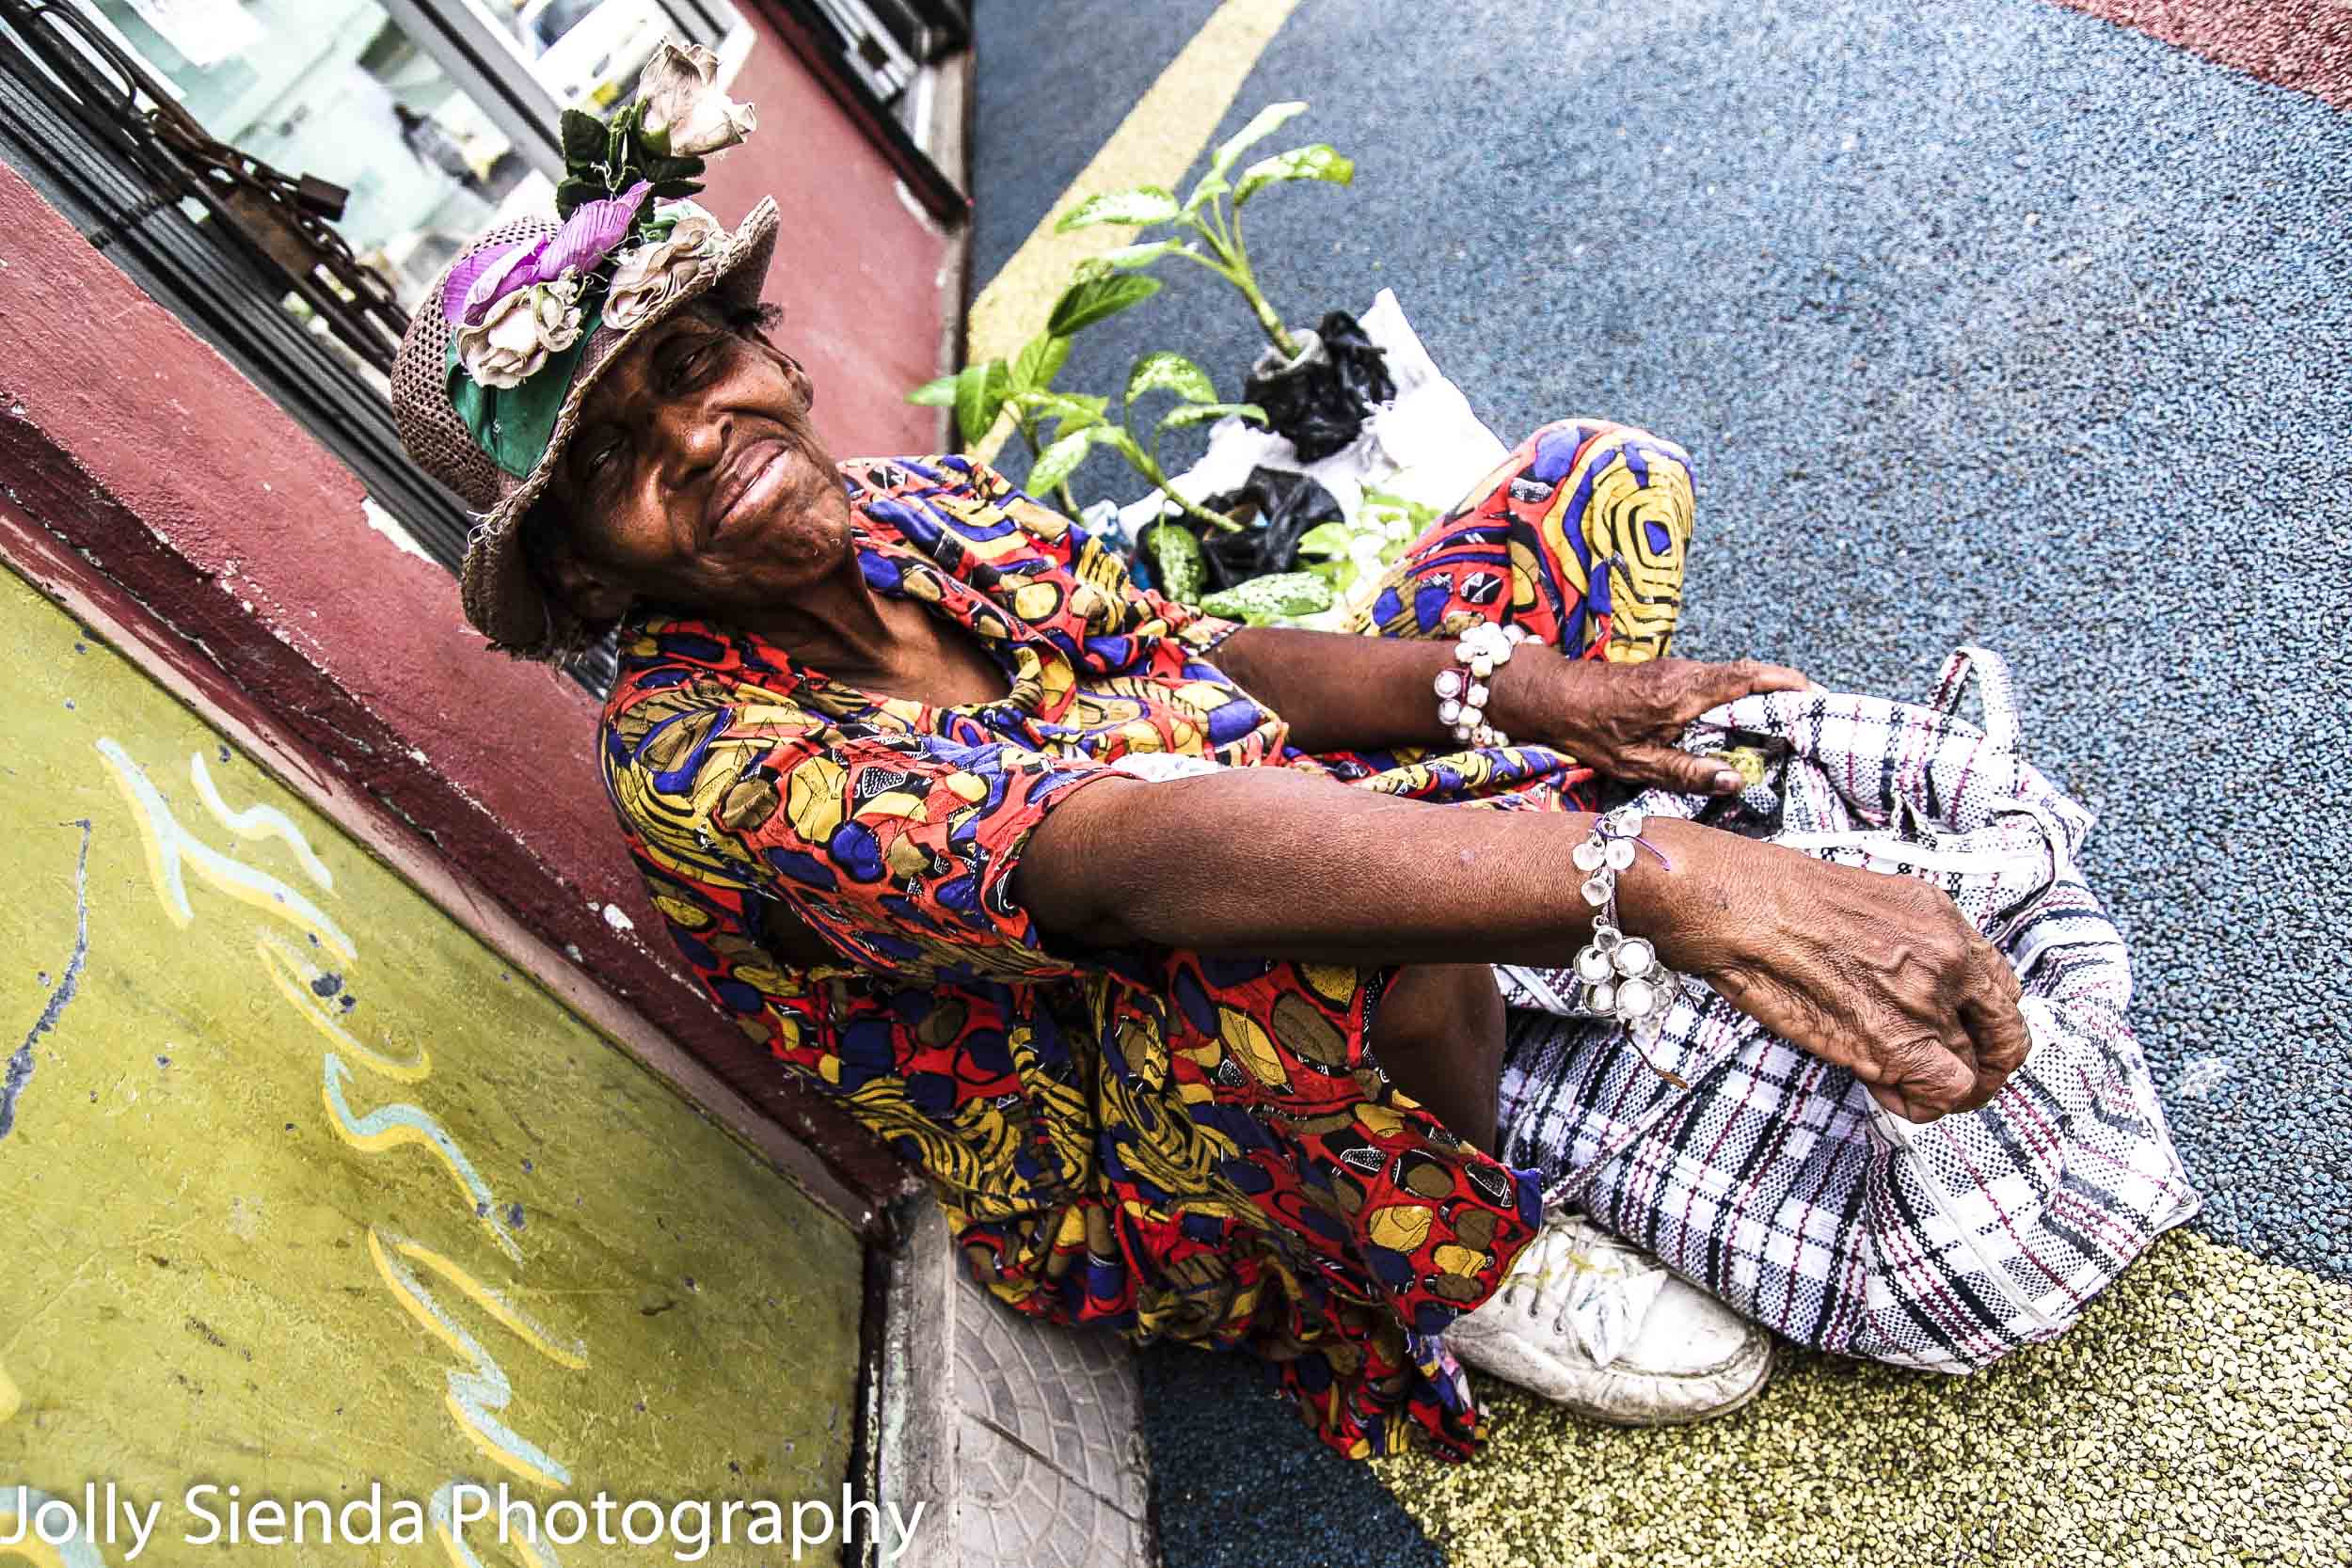 Old woman sells plants on the sidewalk